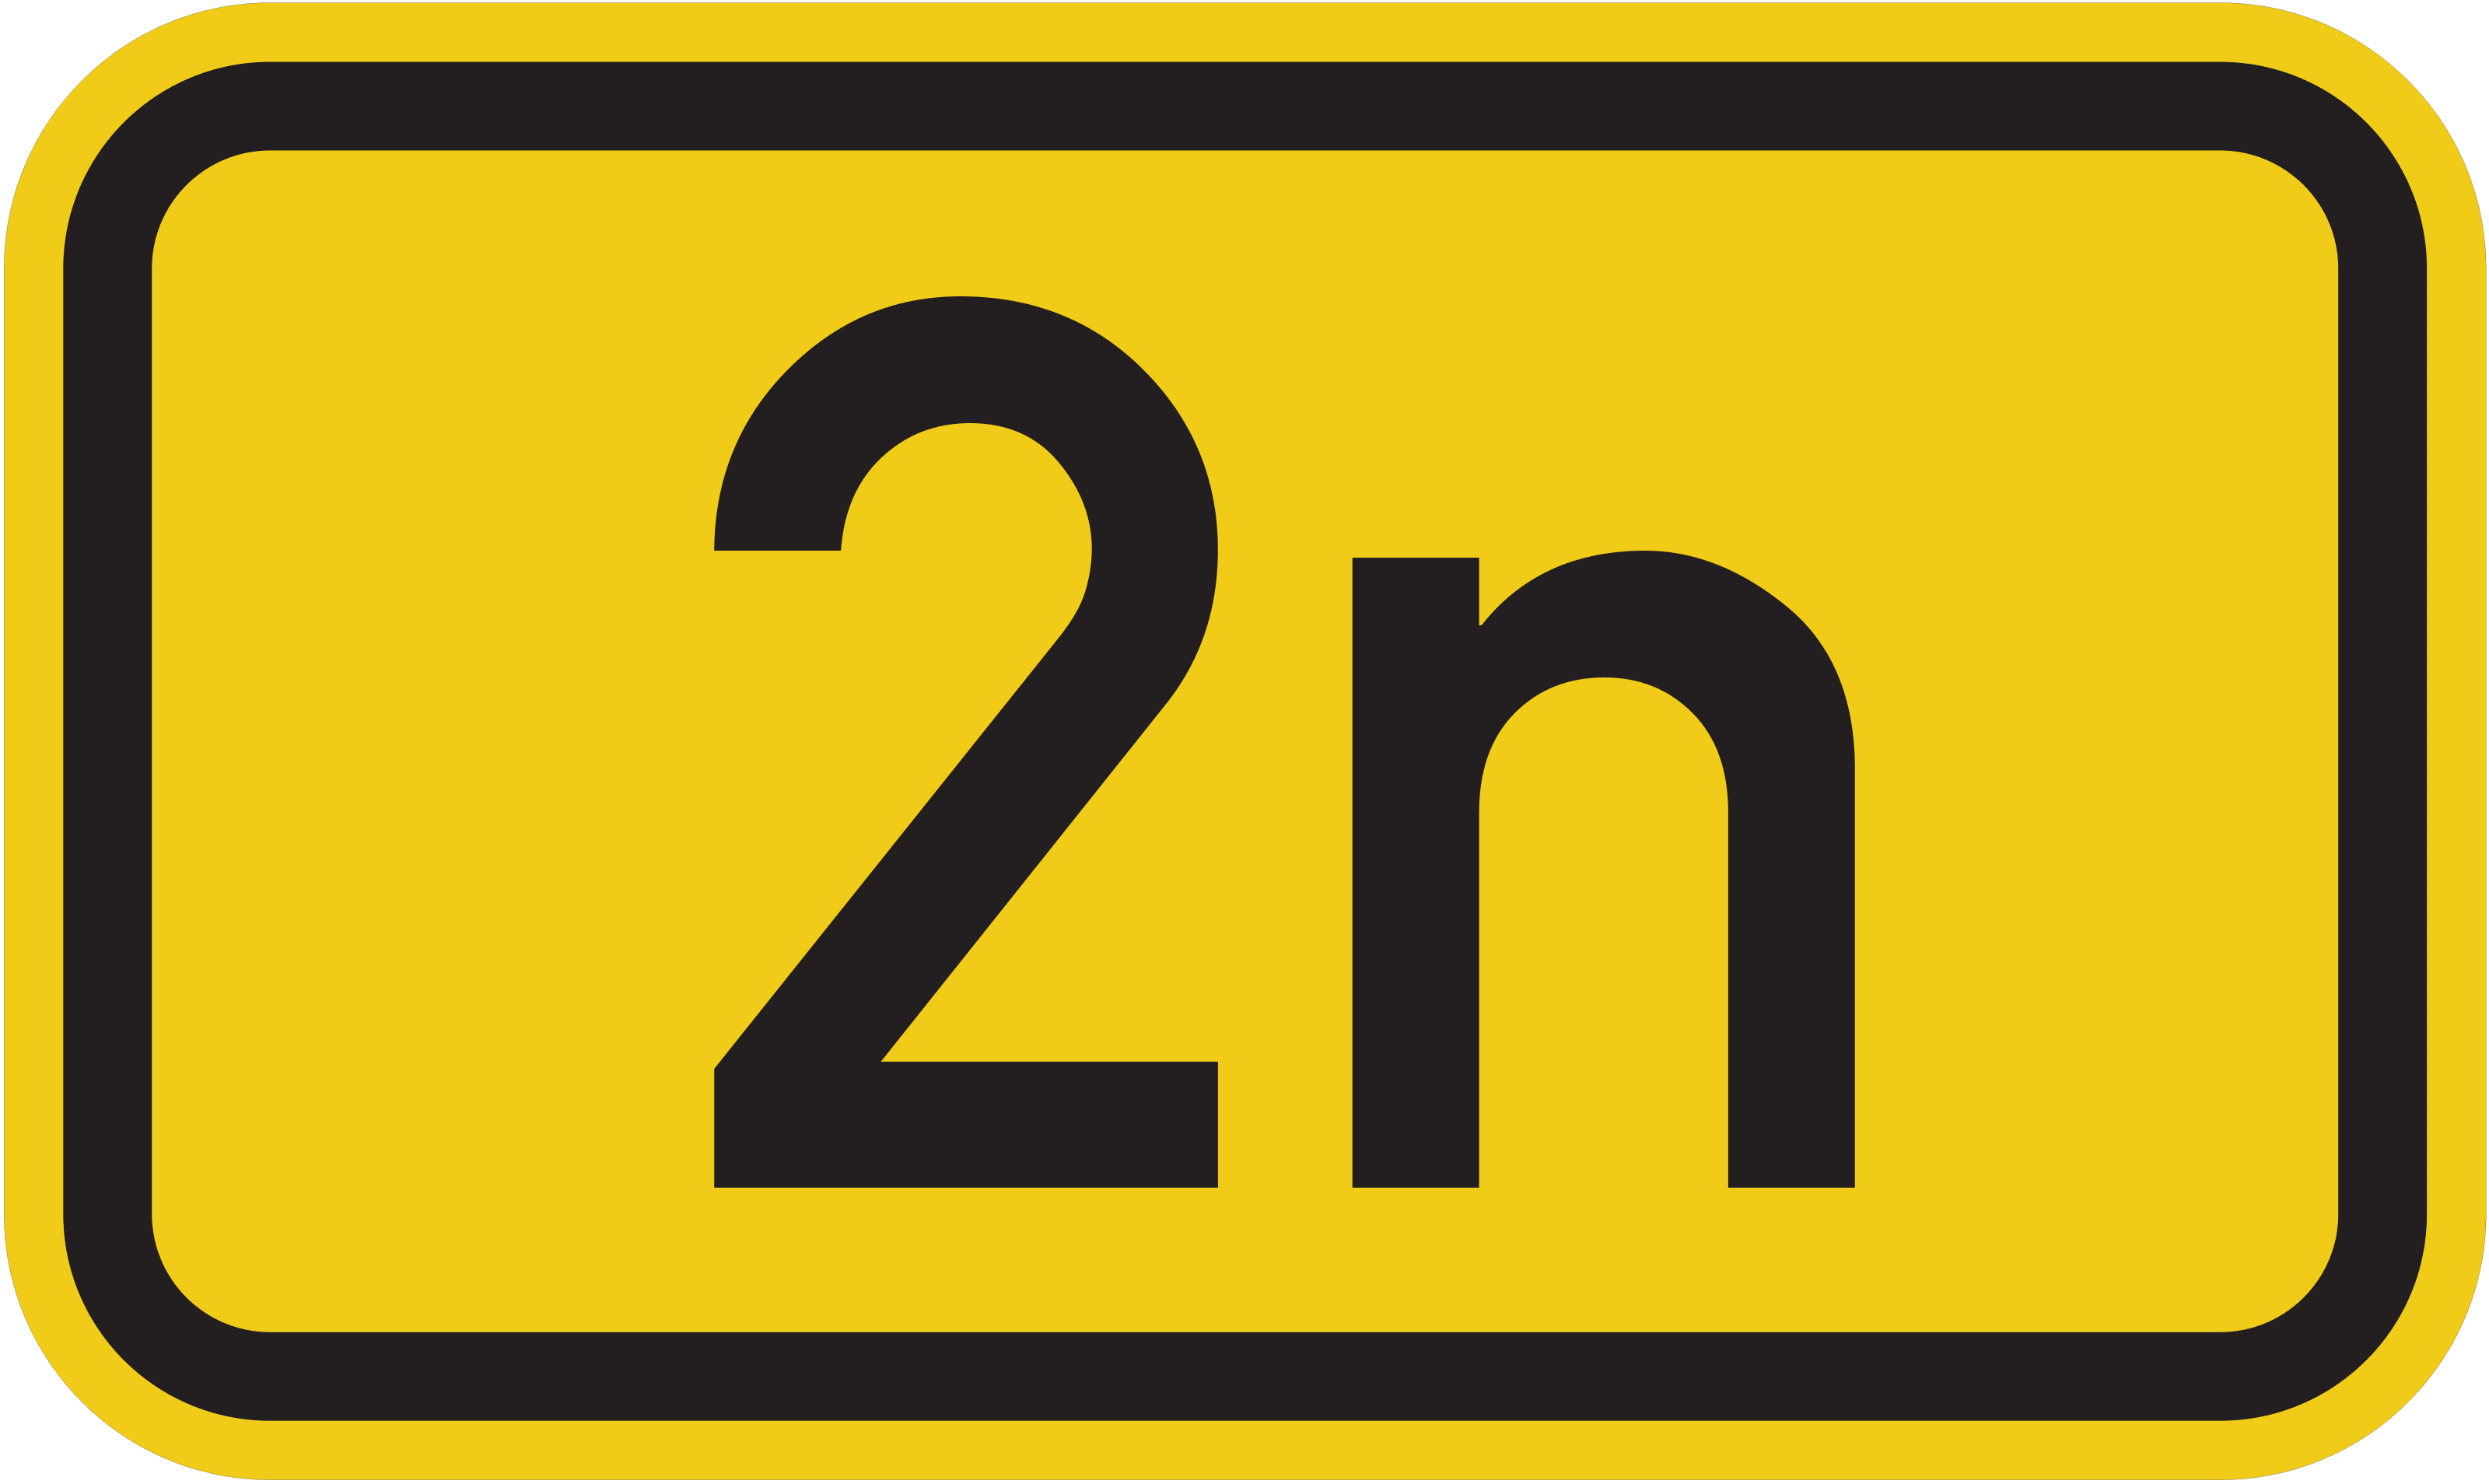 Bundesstraße B 2n